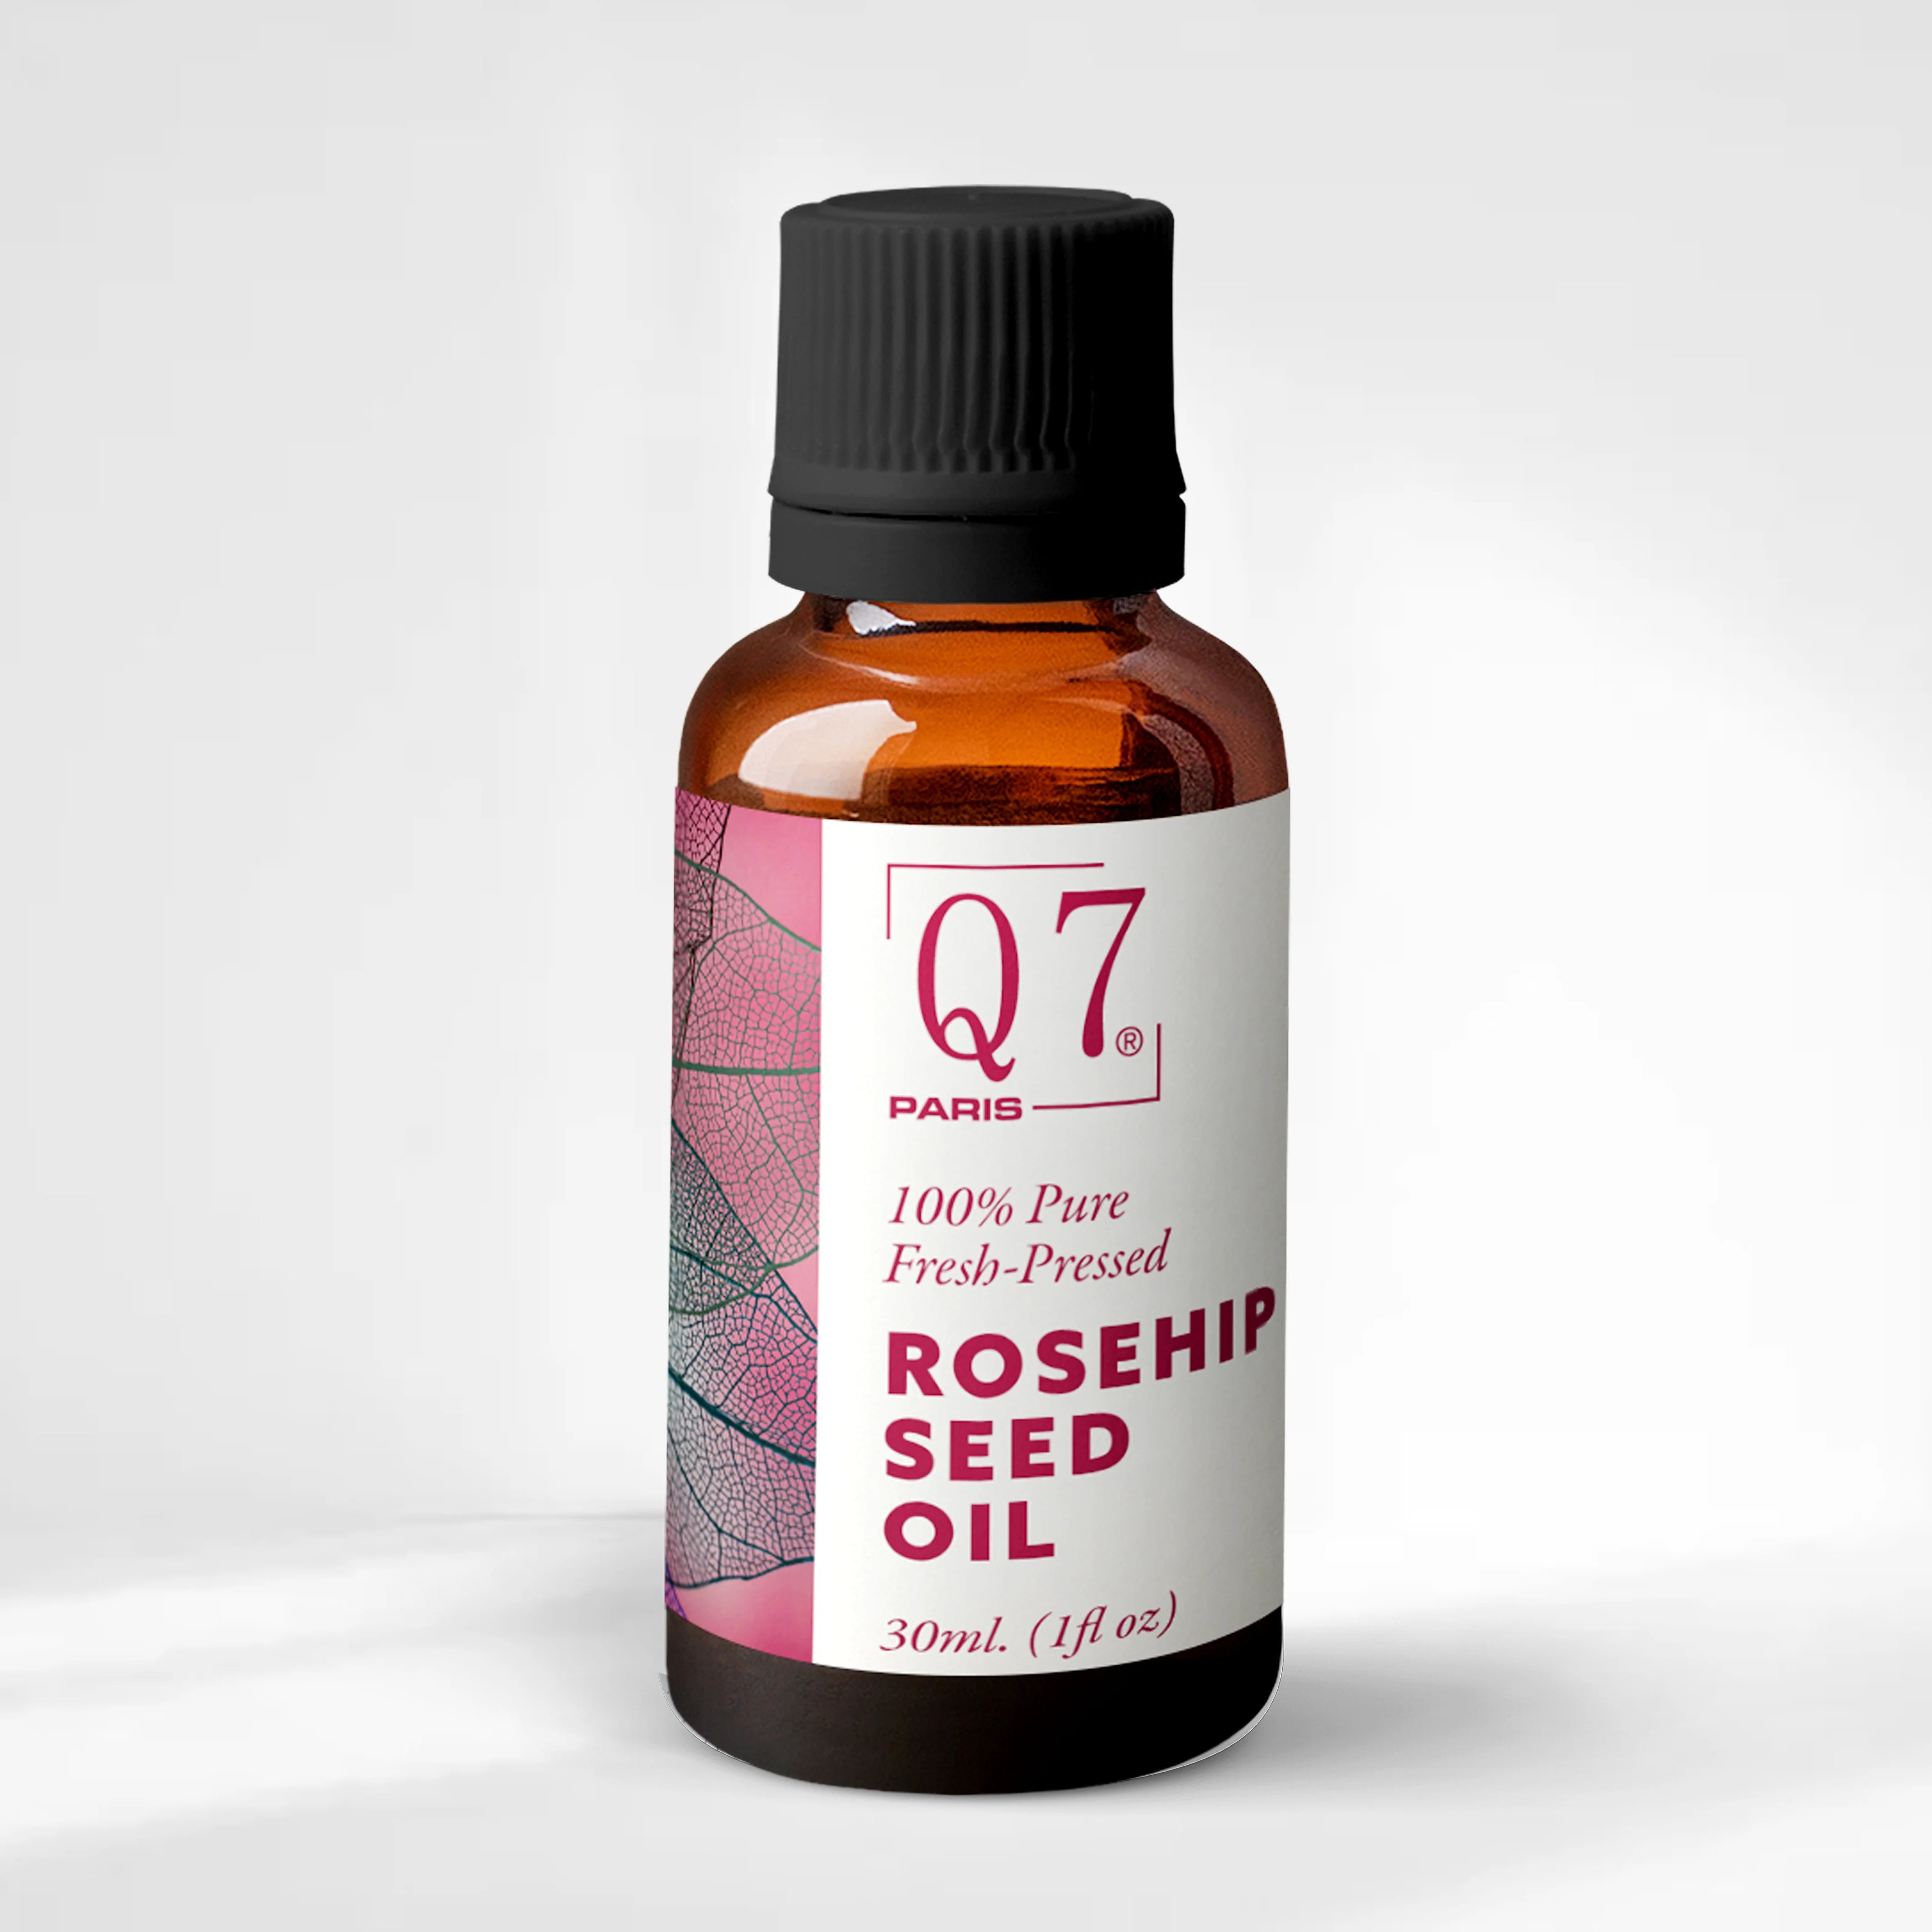 100% Pure, Fresh-Pressed Rosehip Seed Oil – 30ml